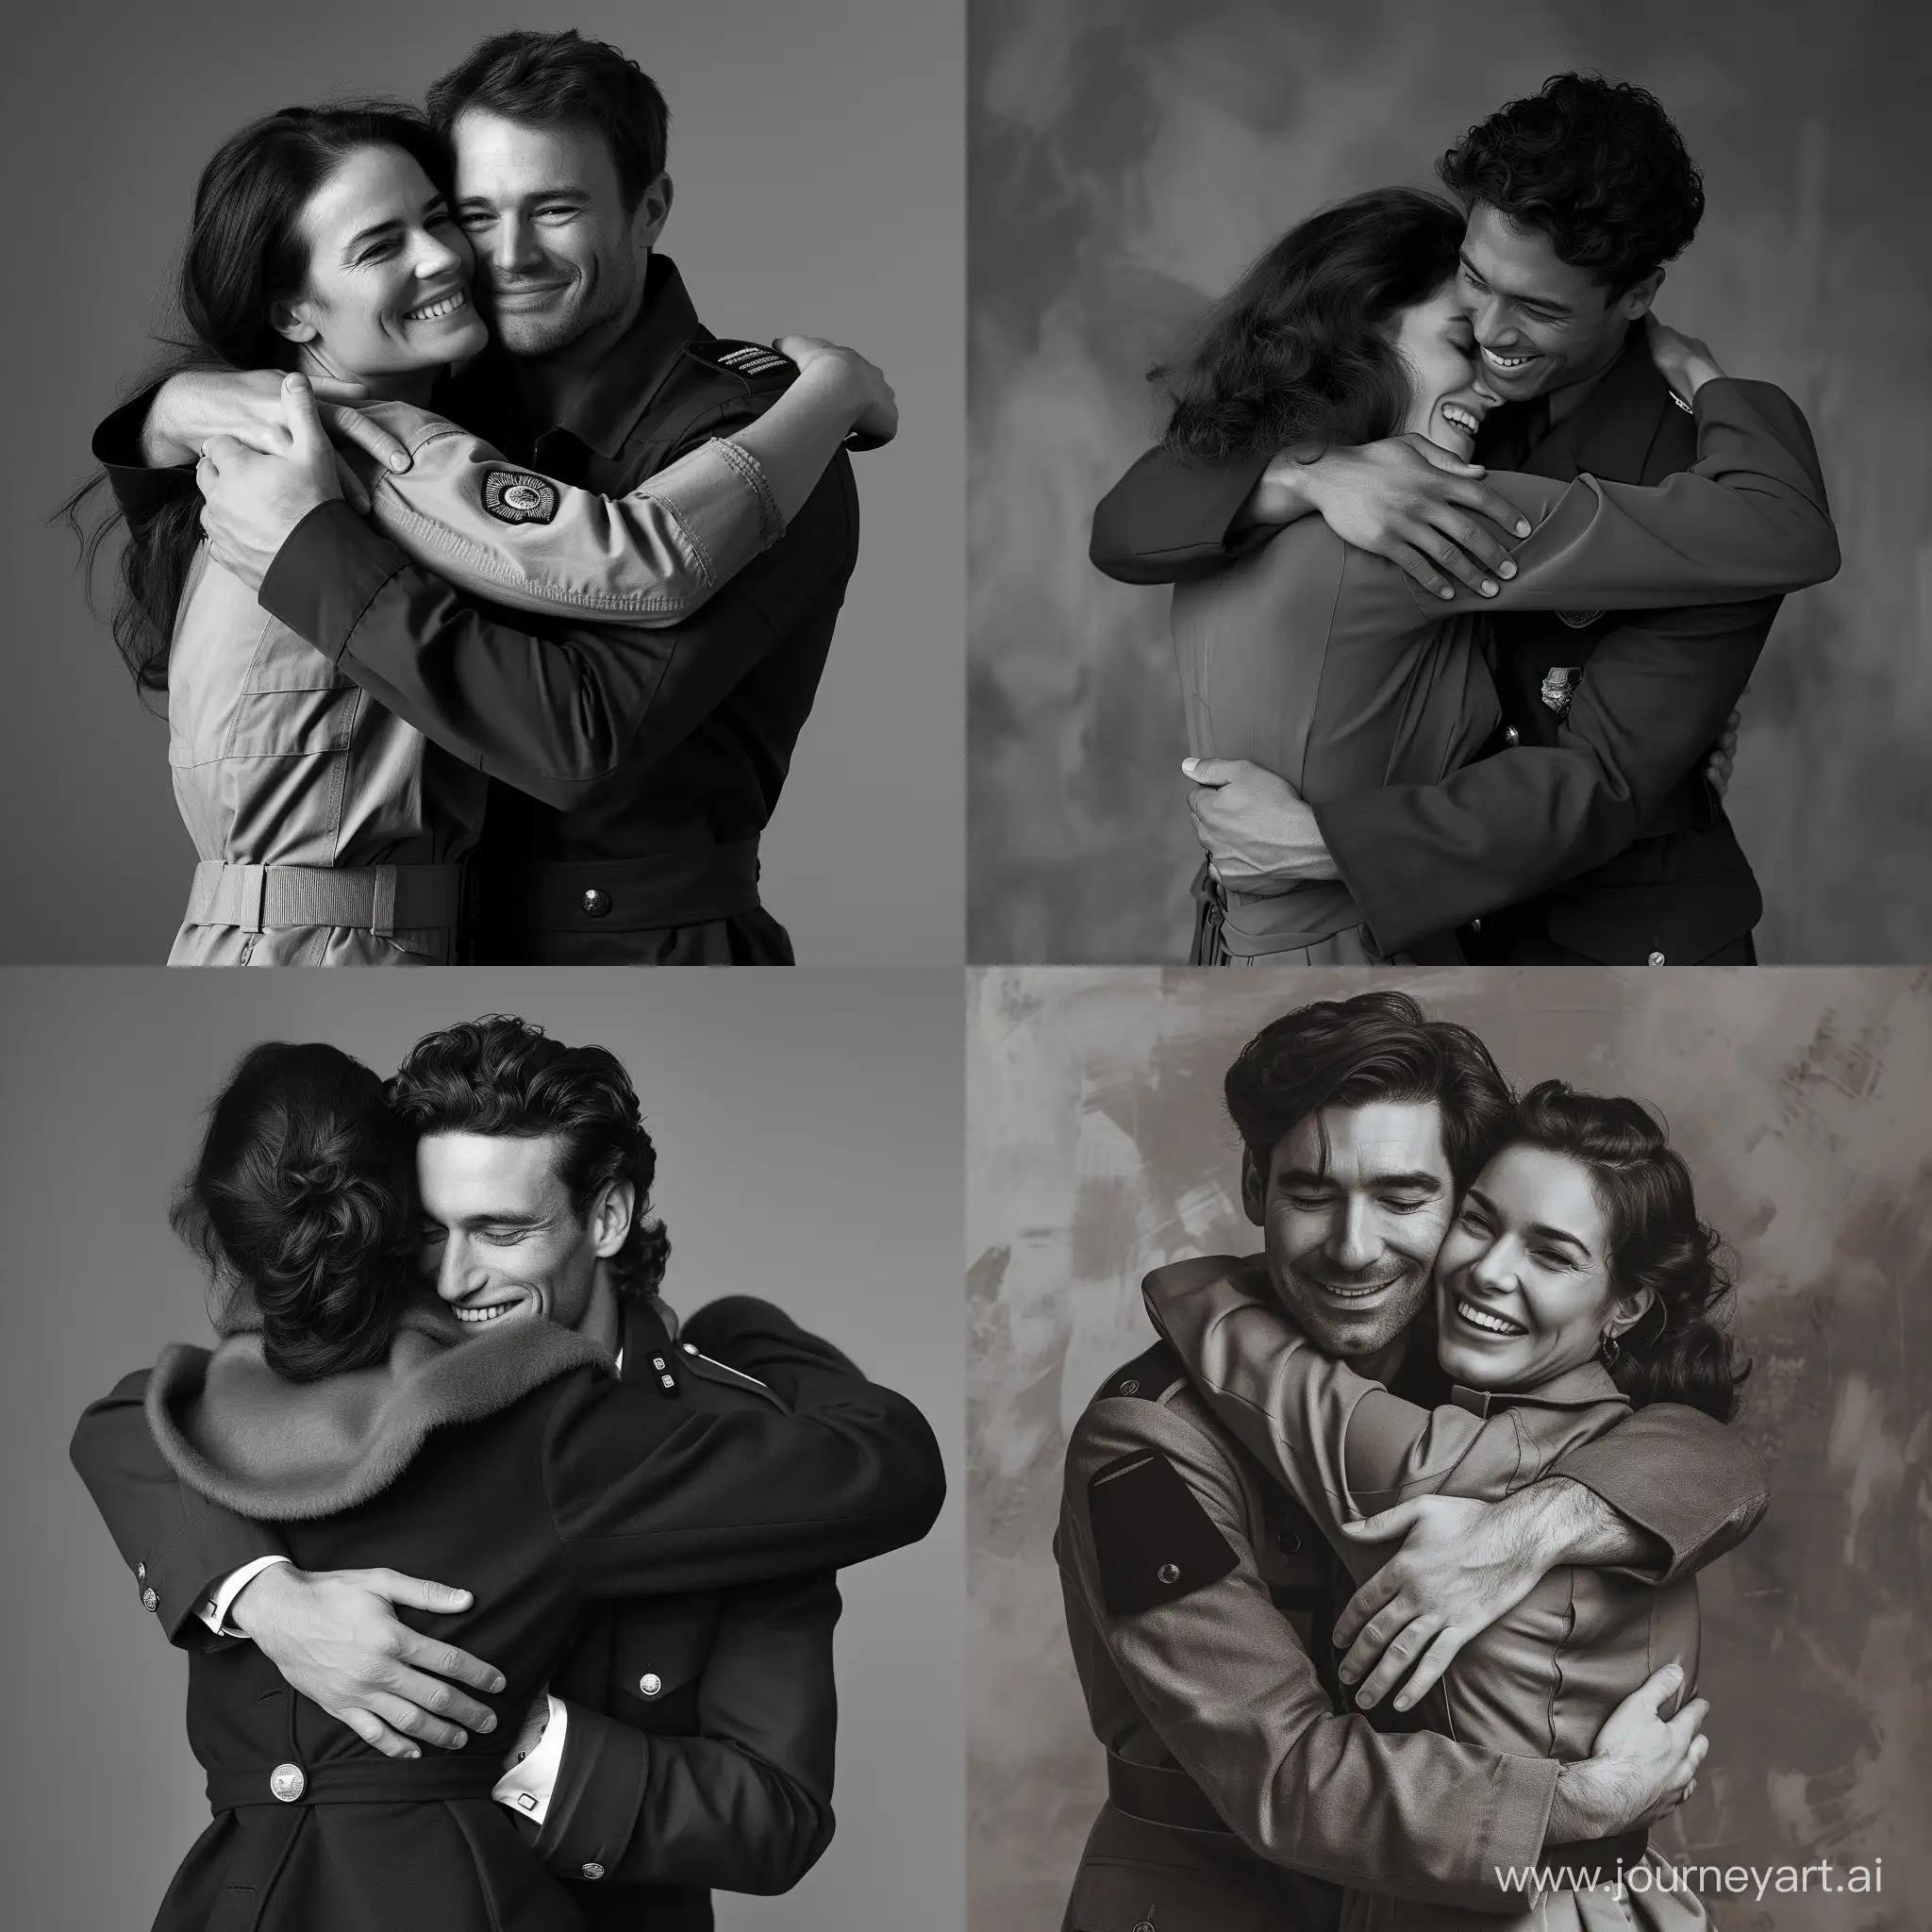 Affectionate-Couple-Embracing-in-Stylish-Black-and-White-Magazine-Portrait